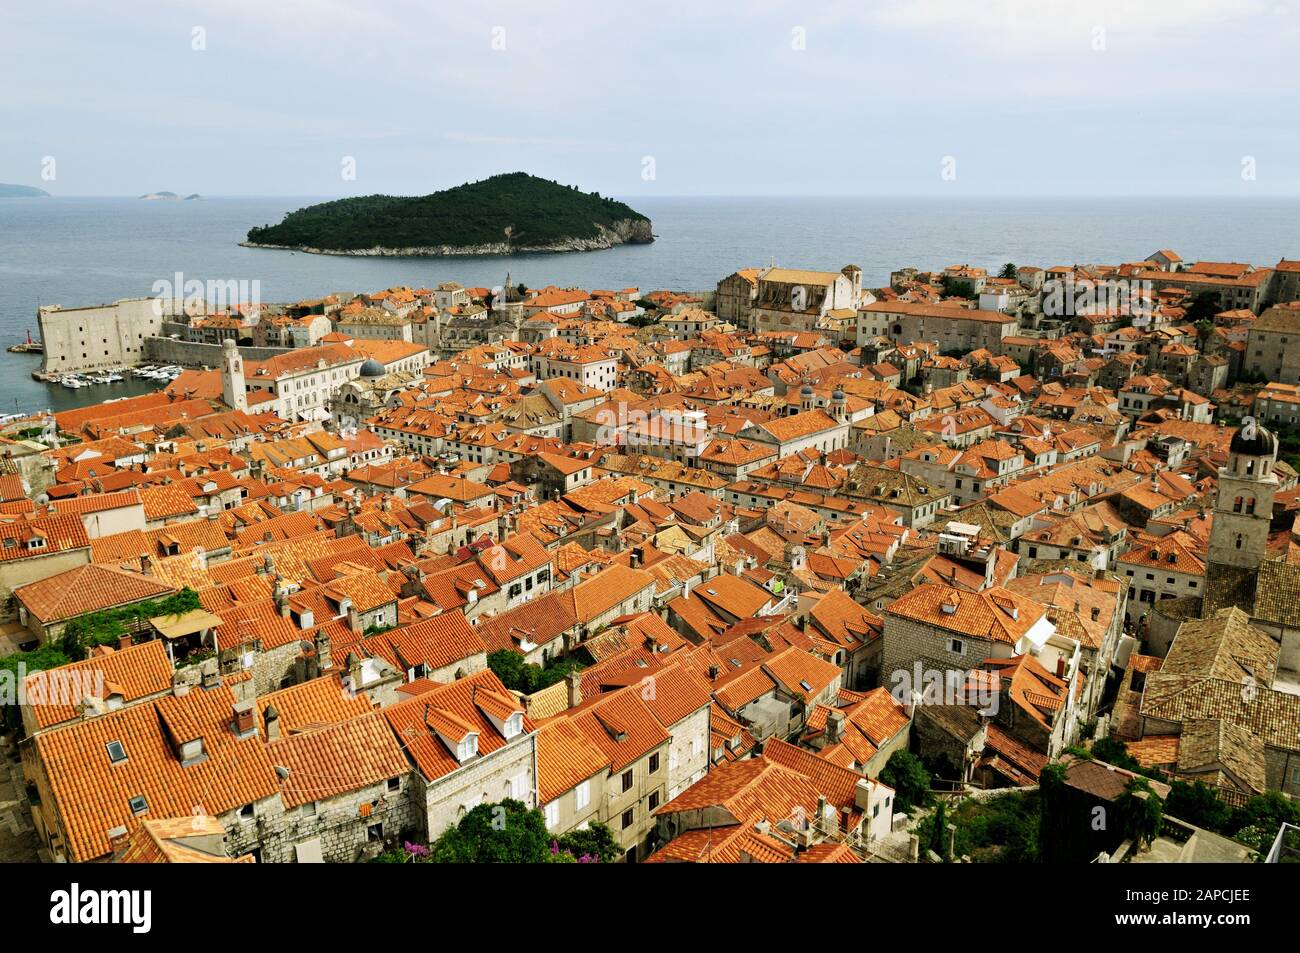 La ciudad vieja de Dubrovnik y la isla Lokrum, Croacia Foto de stock